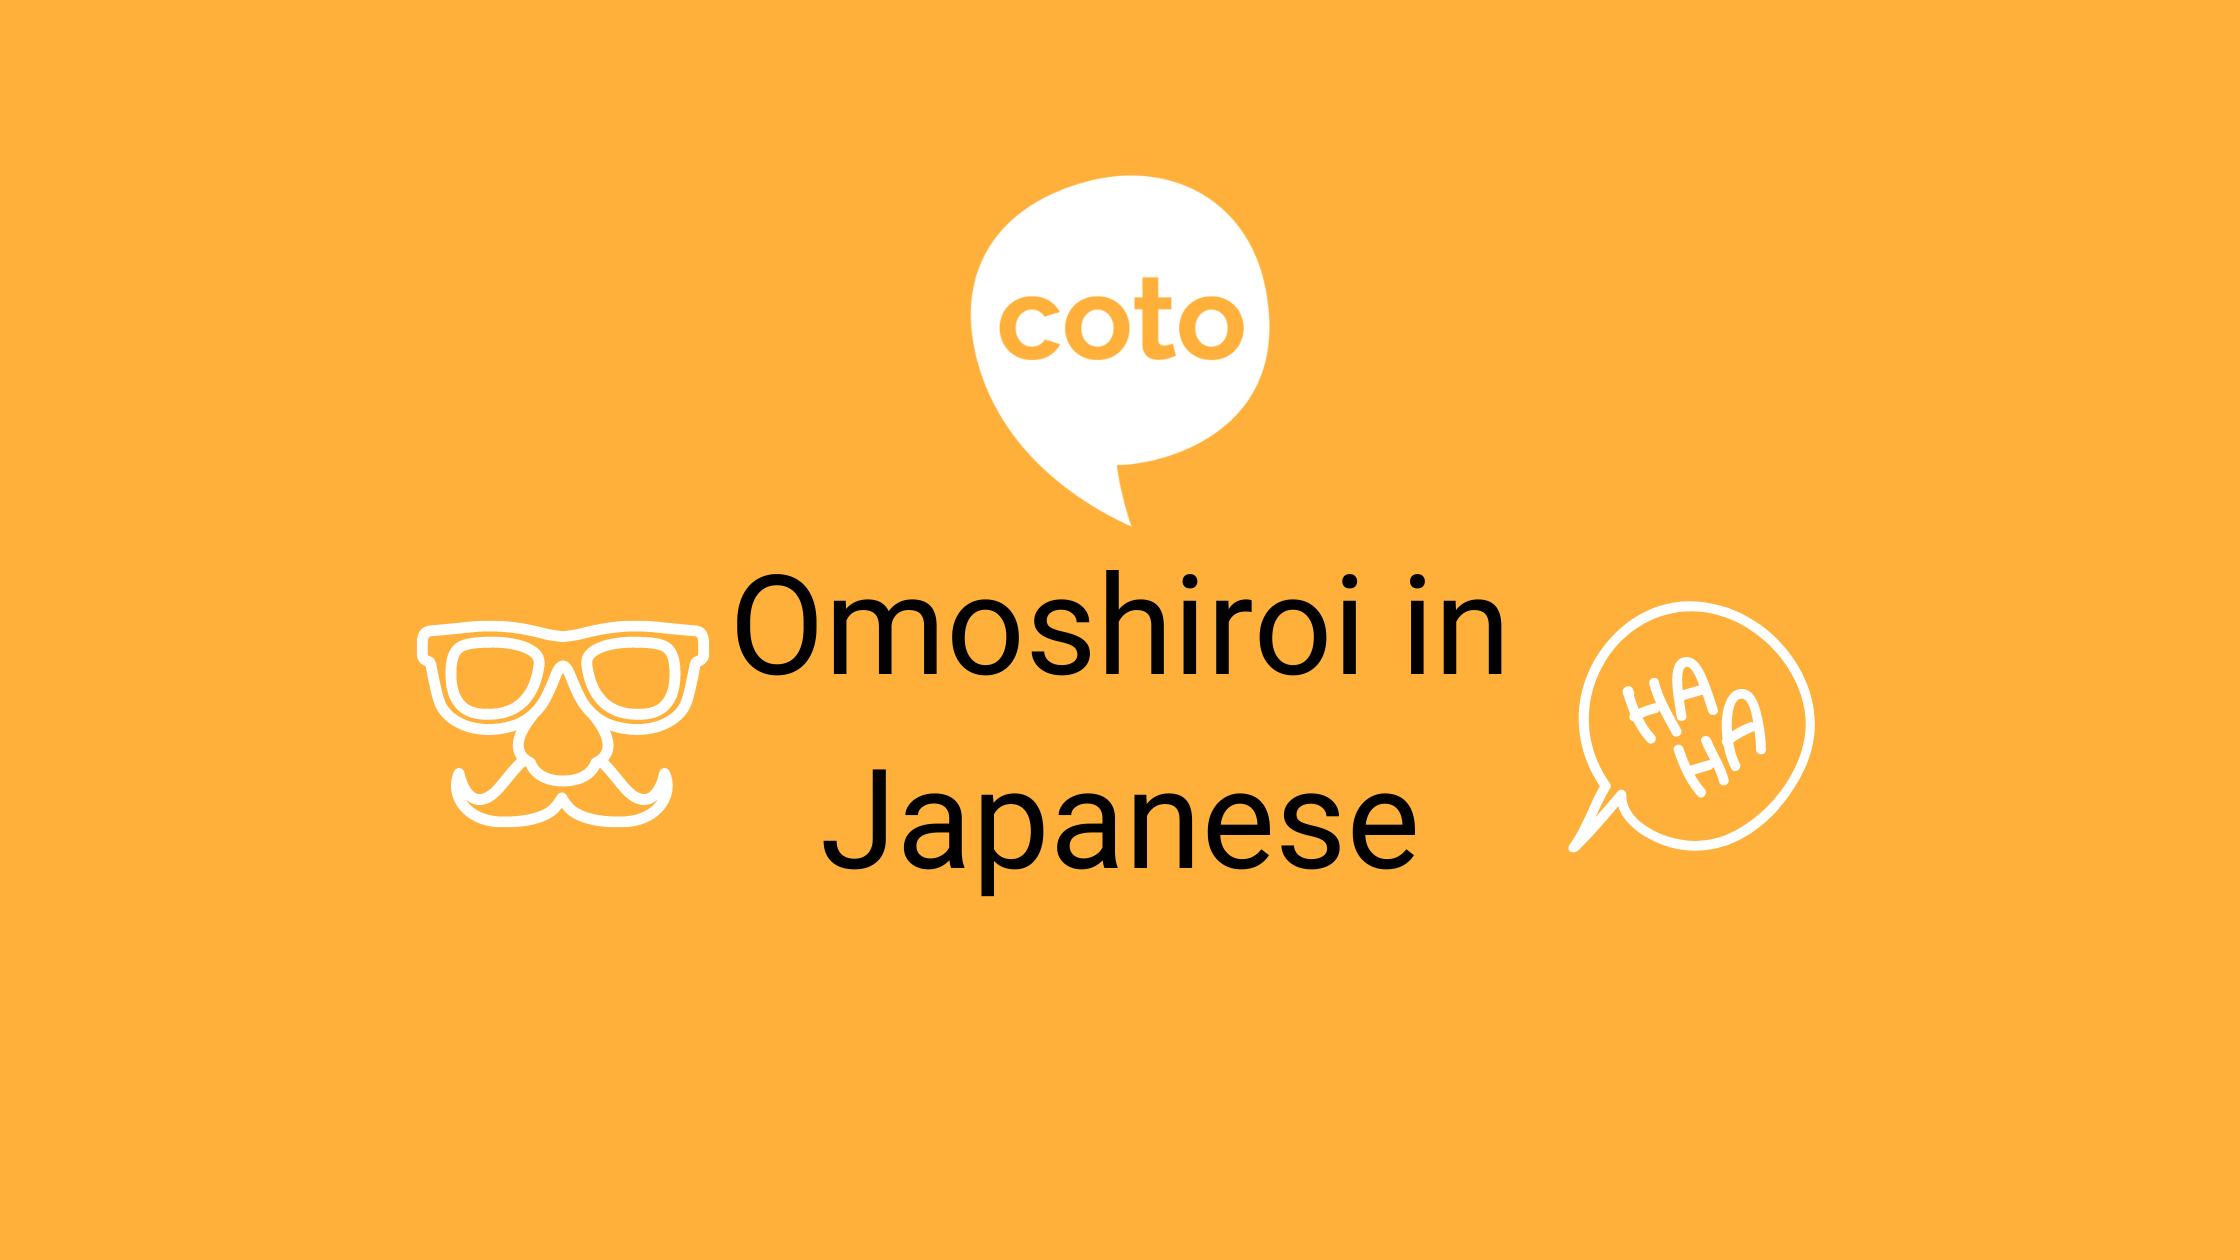 Omoshiroi - 面白い - How to say 